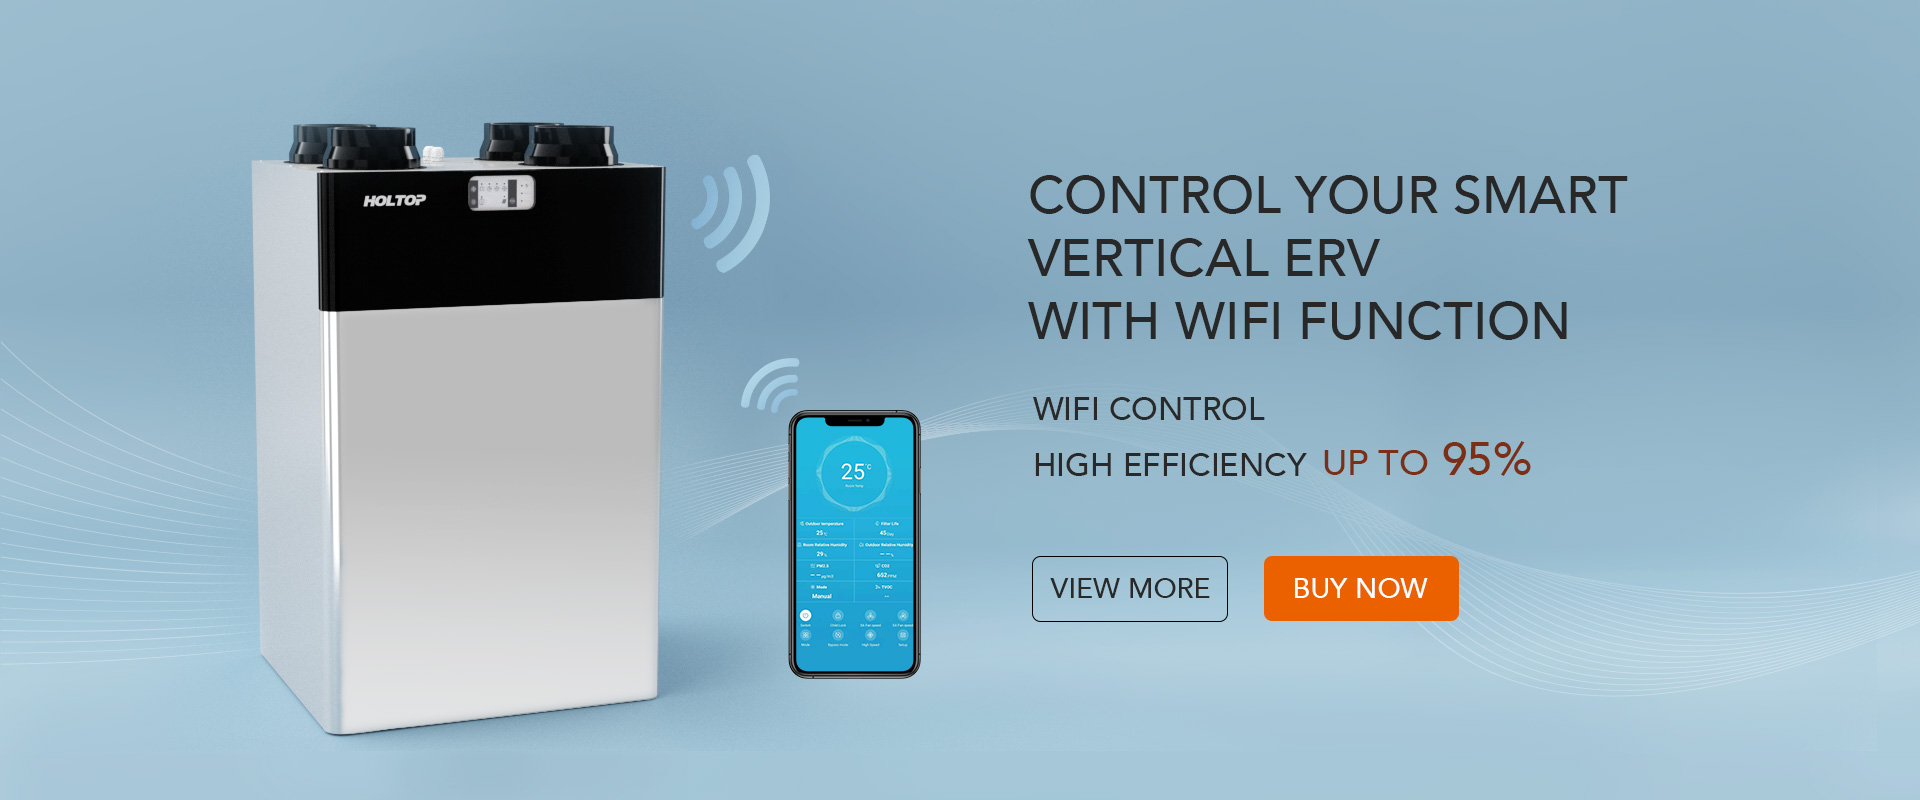 Holtop verbesserte Smart Vertical HRV mit WiFi-Funktion